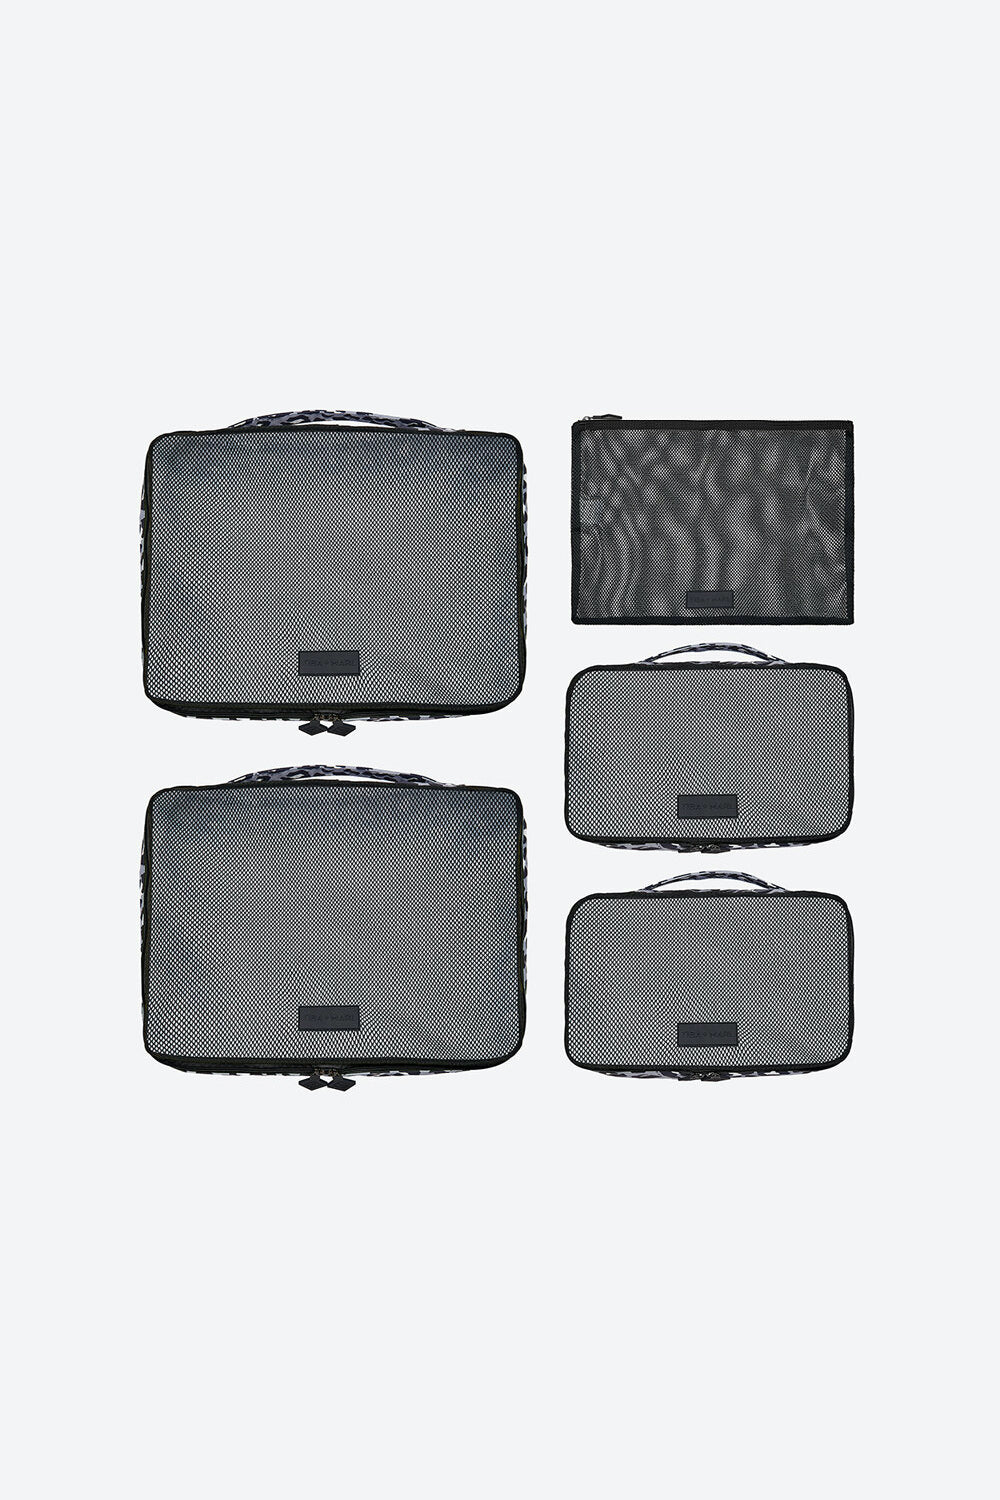 T+M Packing Cubes Set Grey / Black Leopard Print